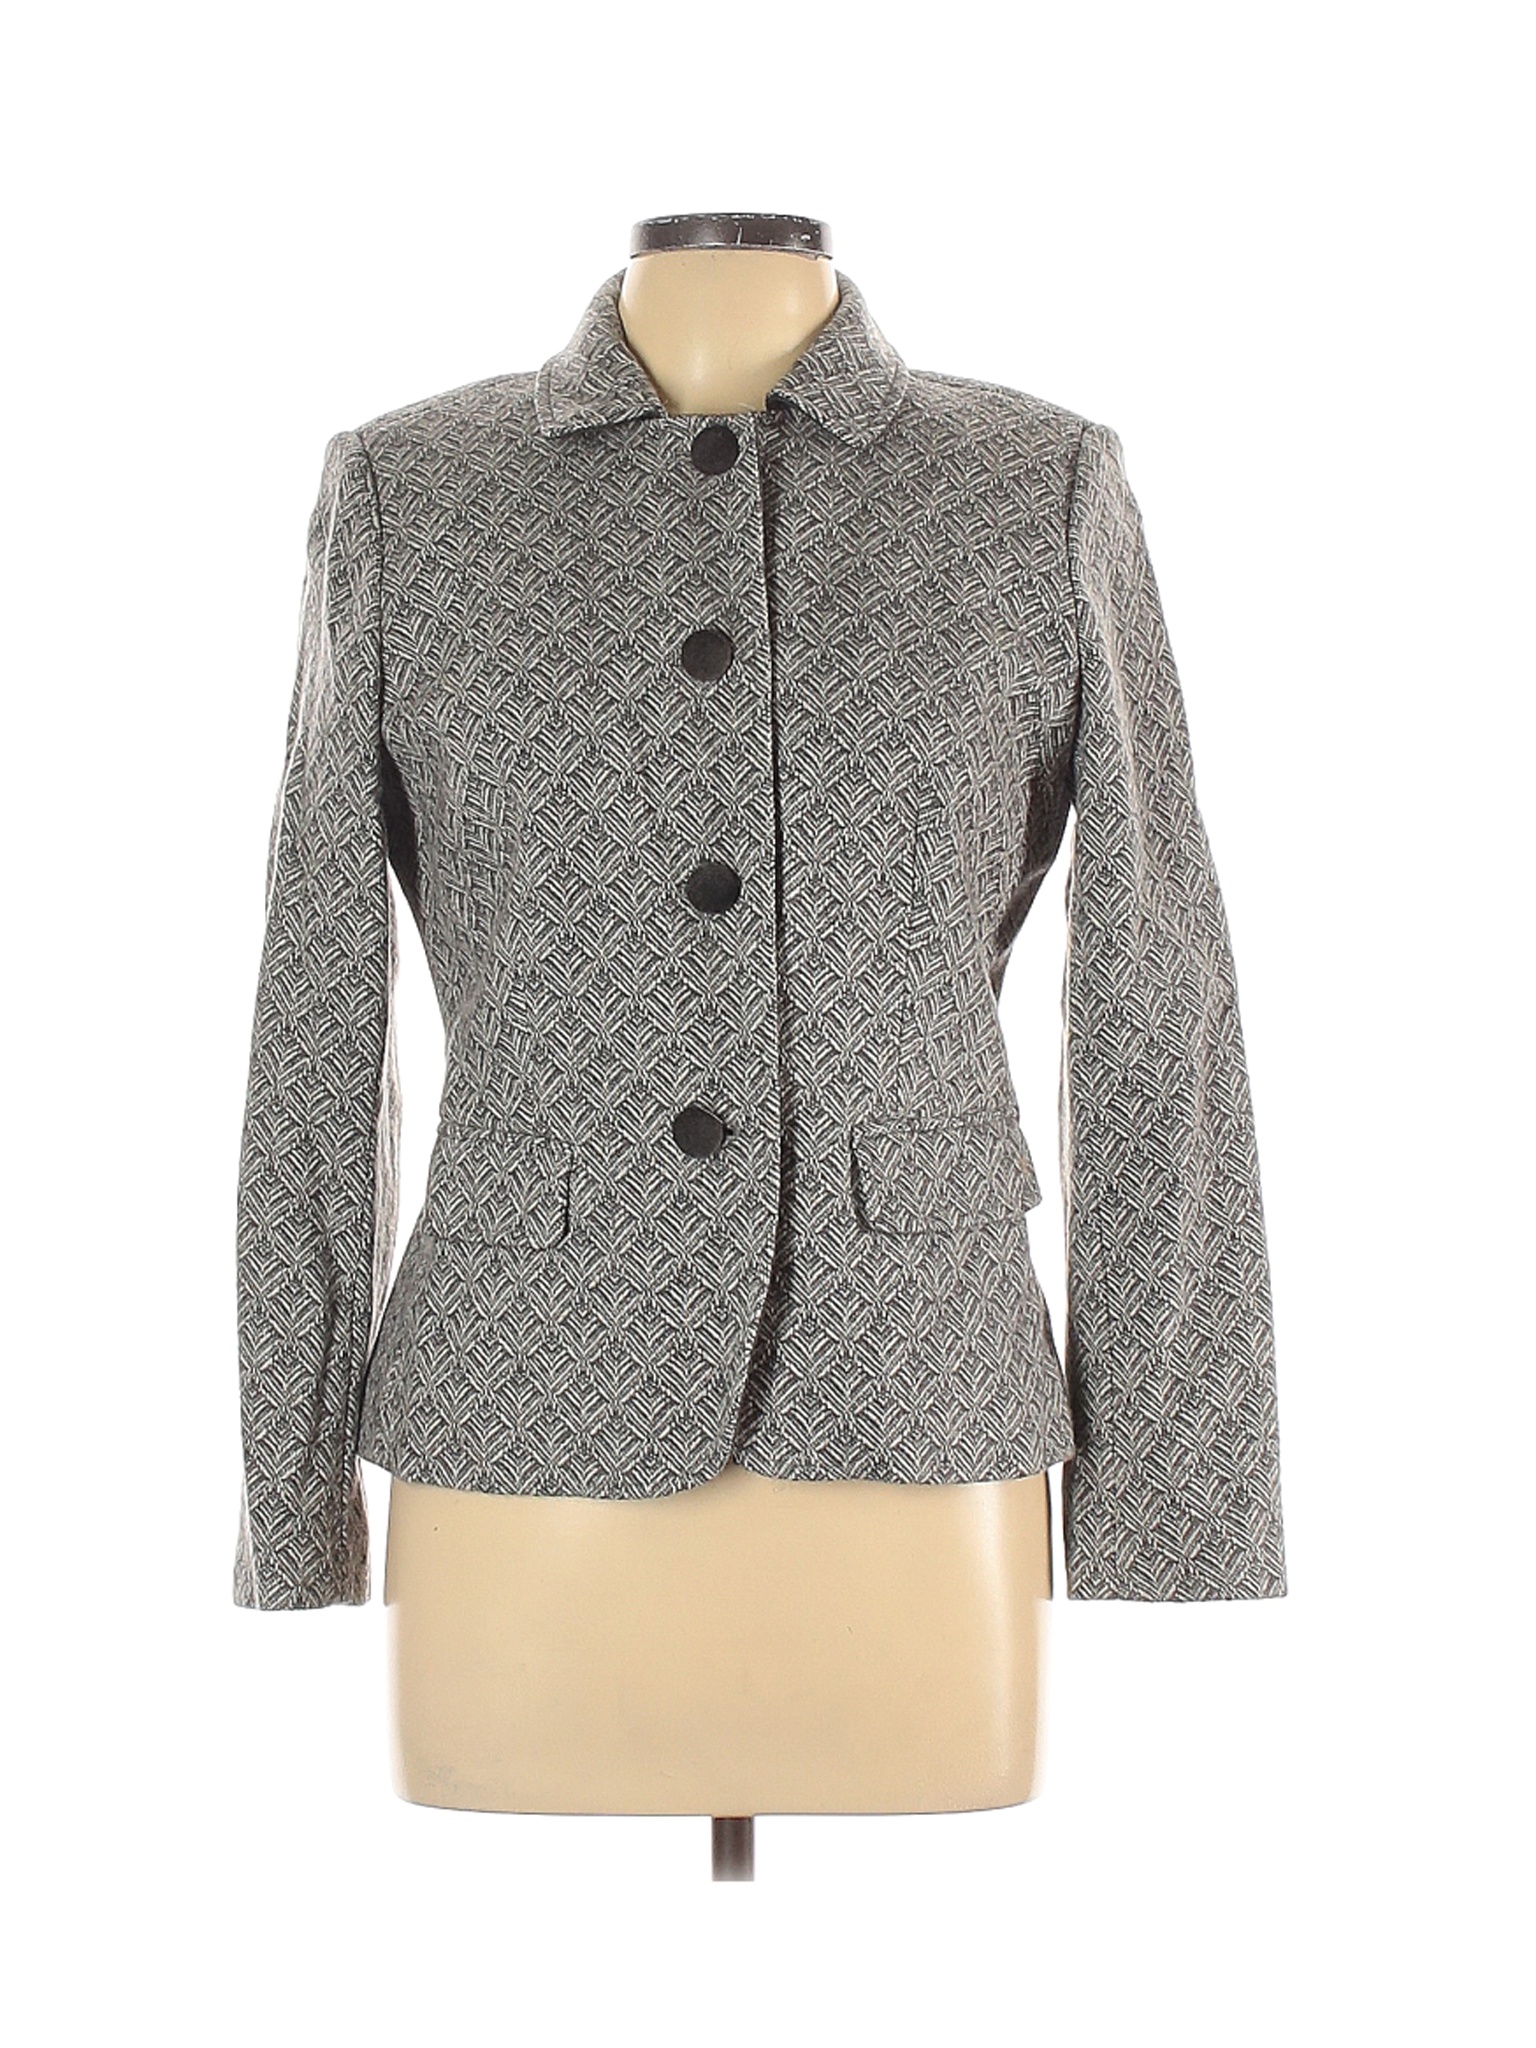 Talbots Women Gray Wool Coat 10 Petites | eBay